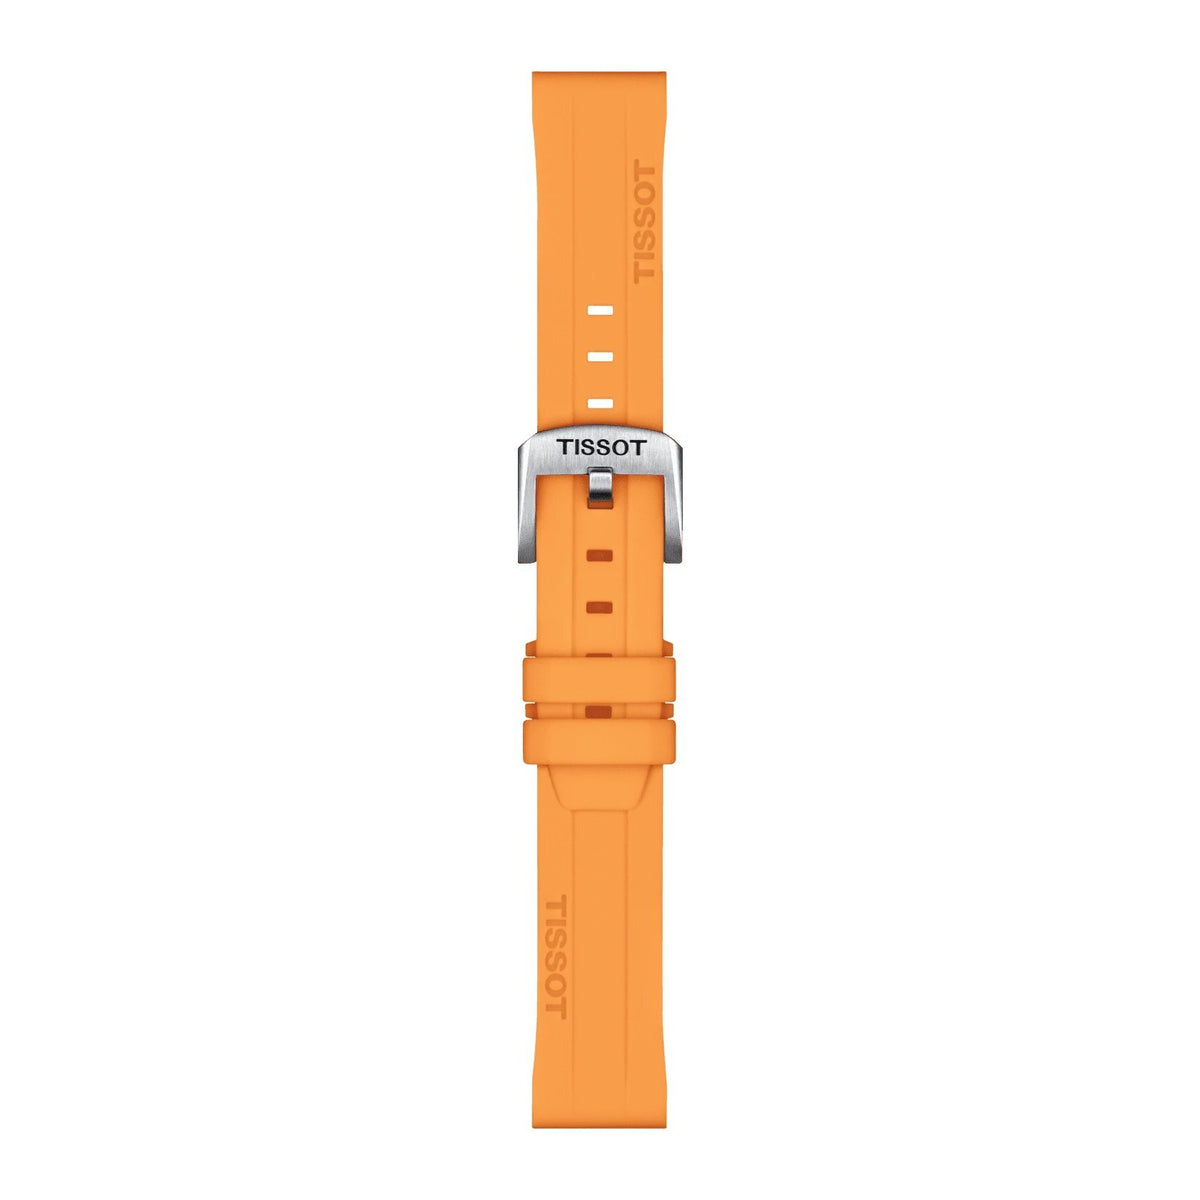 Official Tissot orange silicone strap 22 mm